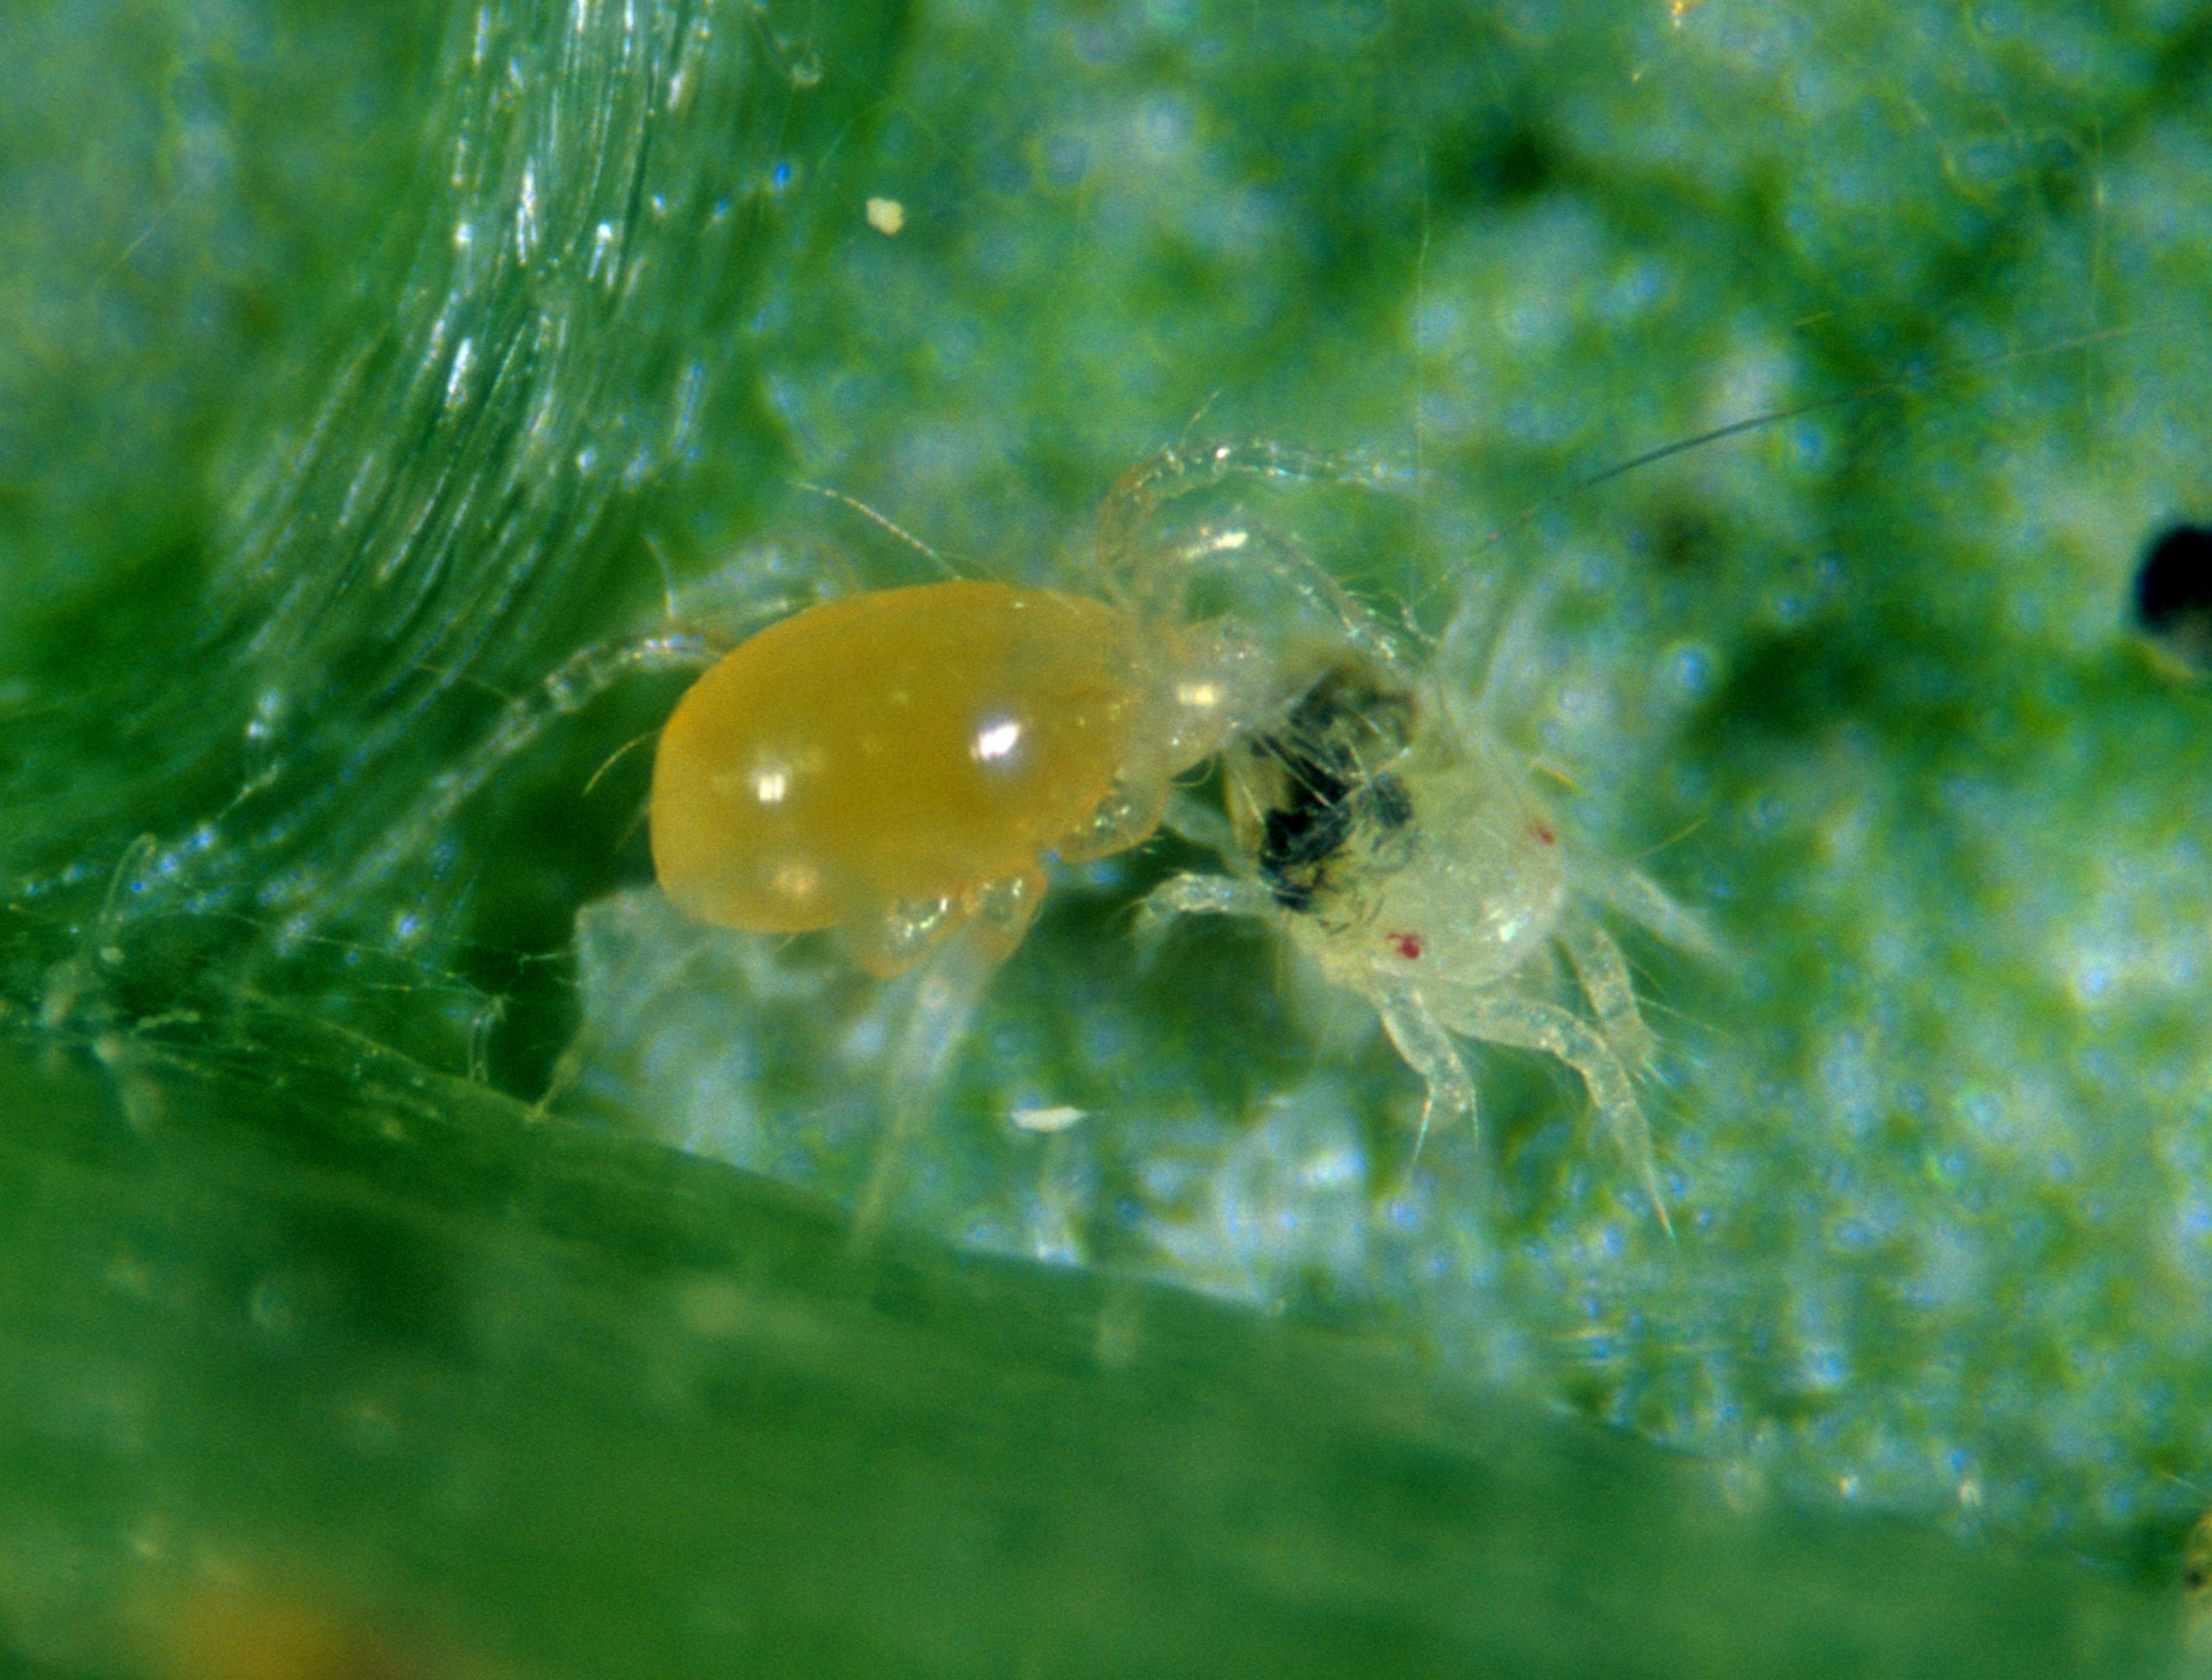 Predatory mite Phytoseiulus persimilis attacking two spotted spider mite prey